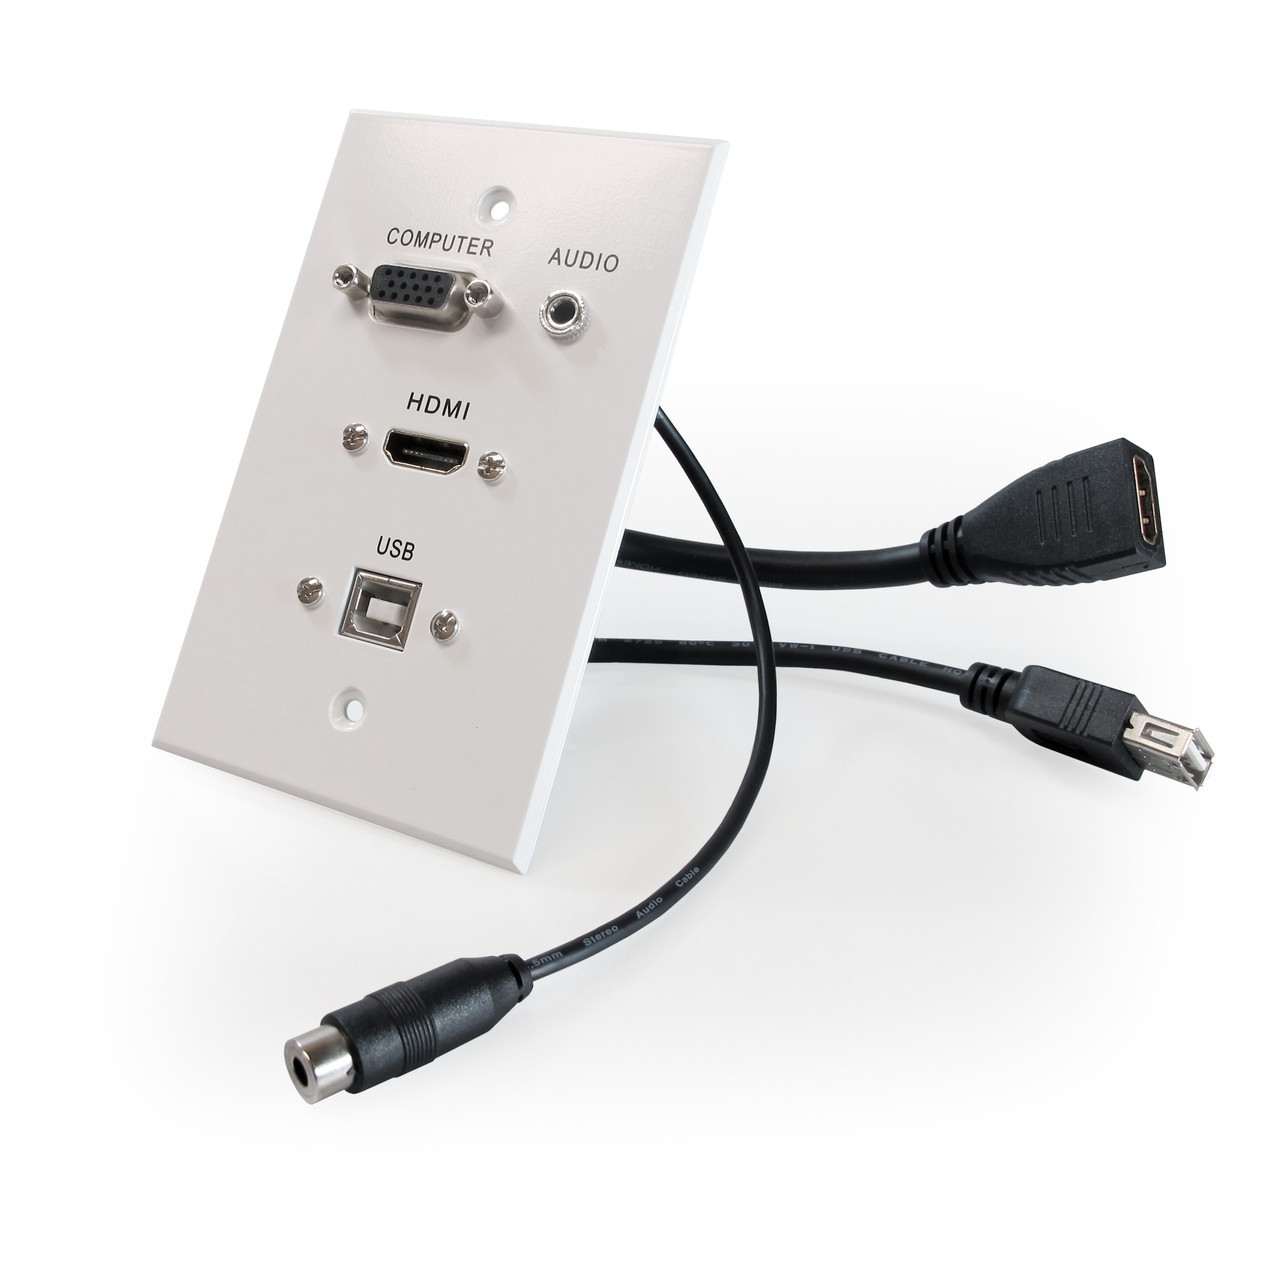 Mini DP Display Port to HDMI VGA 3.5mm Audio Adapter Cable